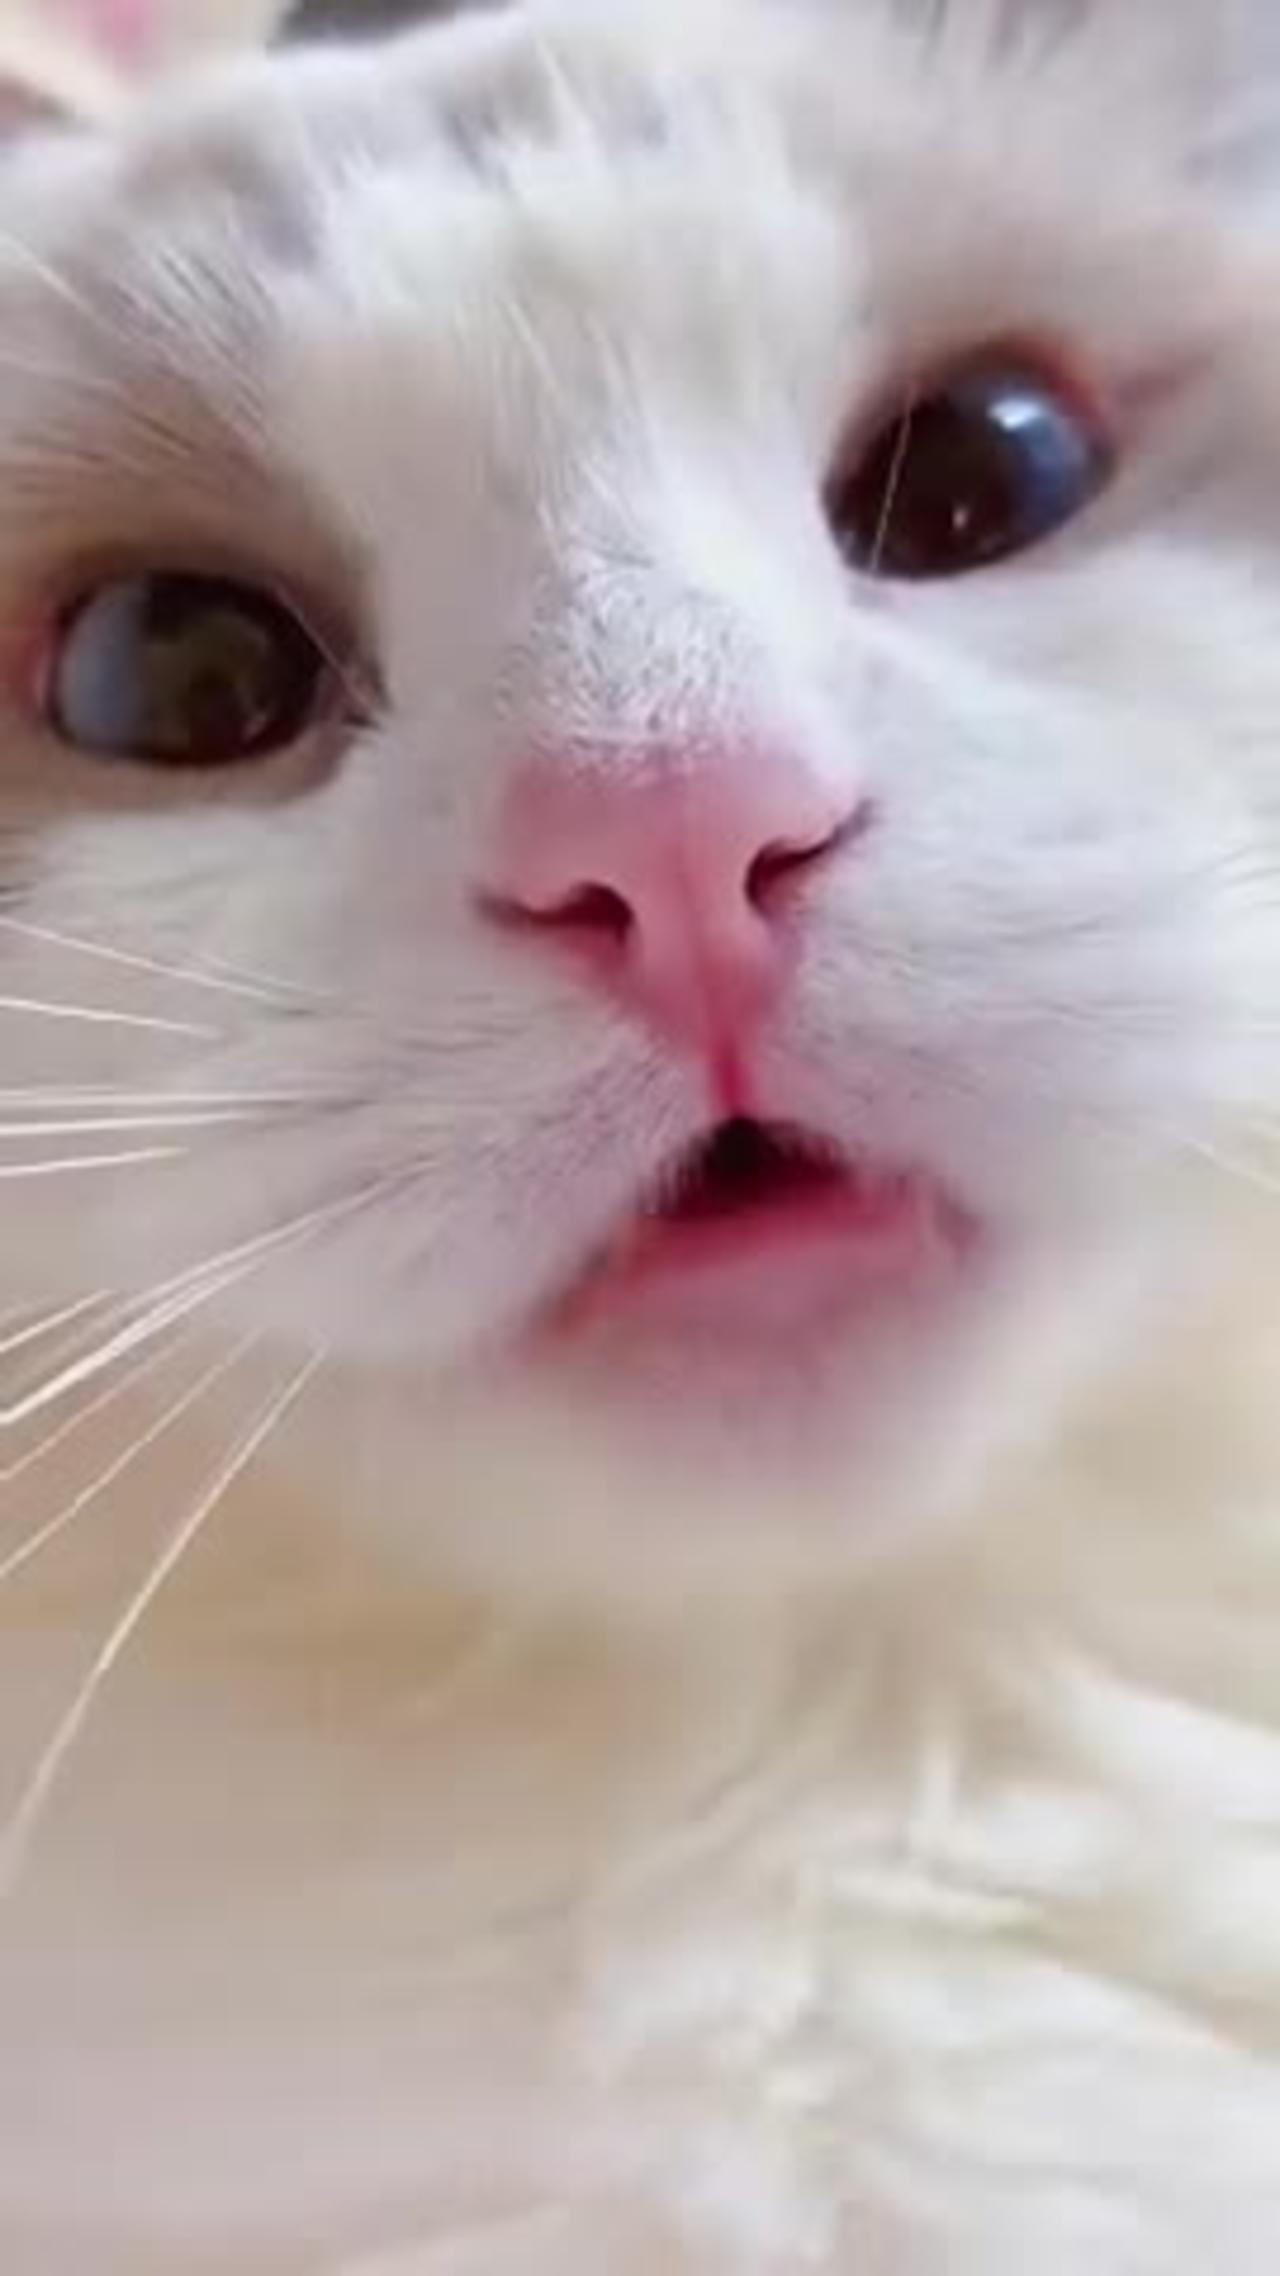 #shorts cat meme & kitten (tik tok video]💘 - funny cats meow baby cute compilation [cat-cash home)